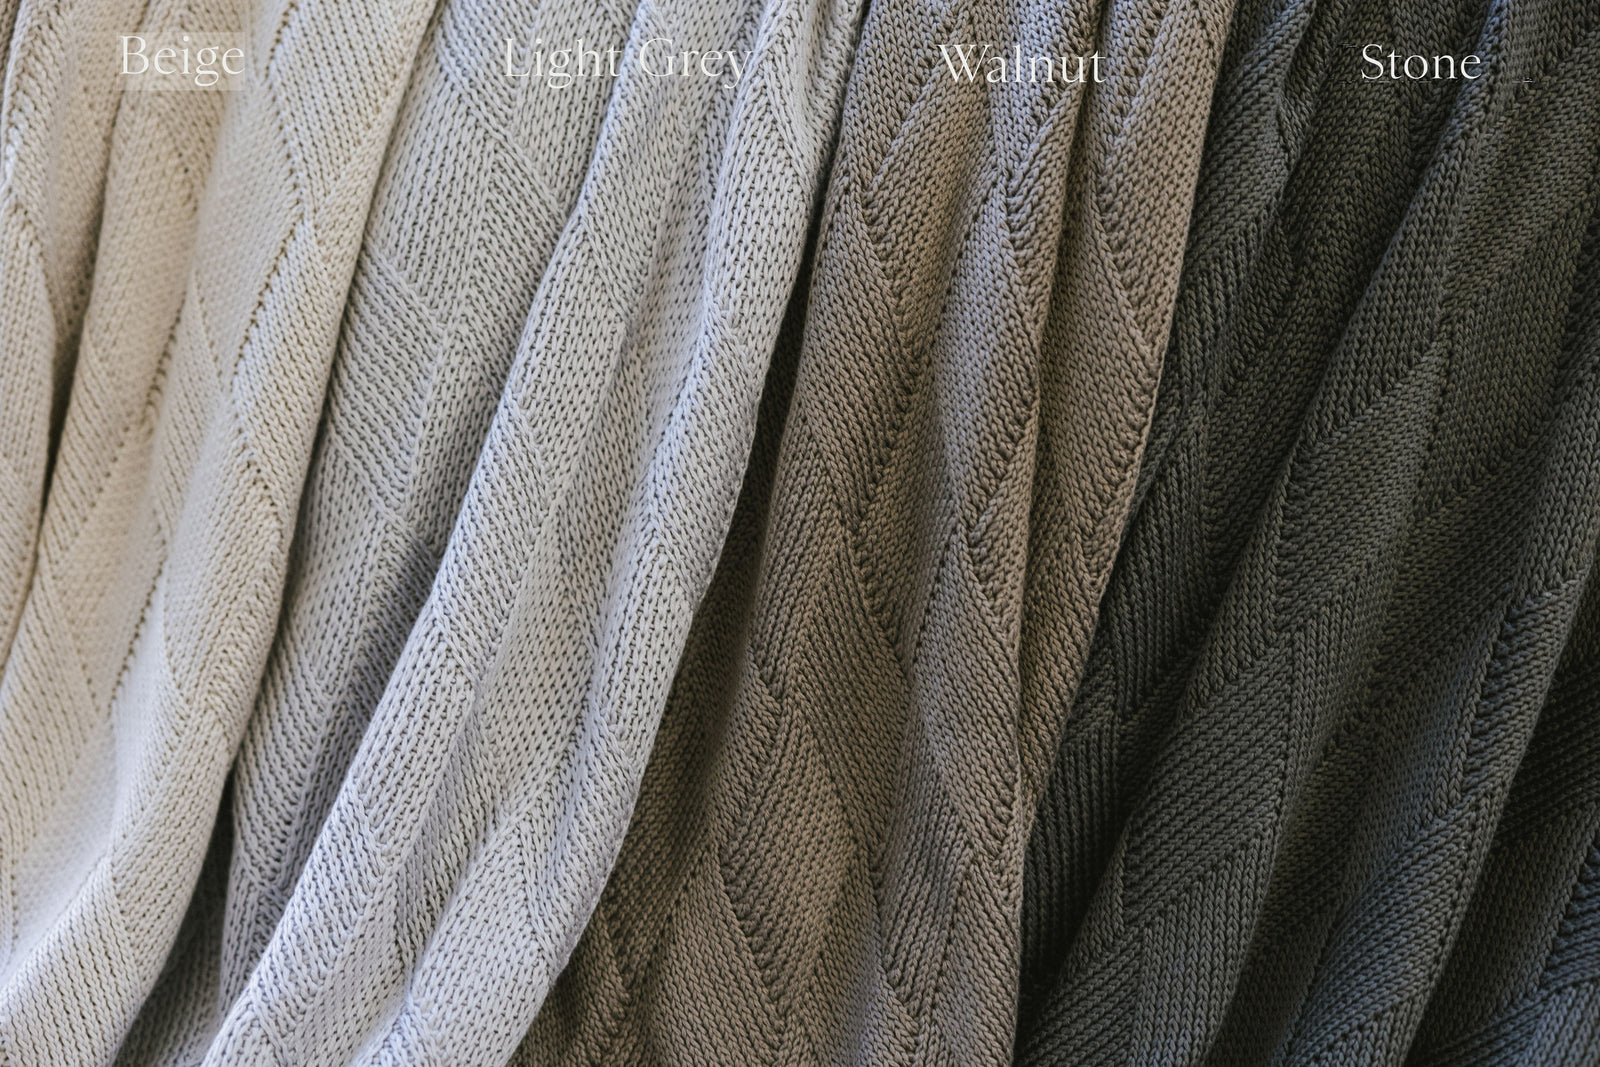 Light Grey Diamond Knit Blanket photographed close up. 